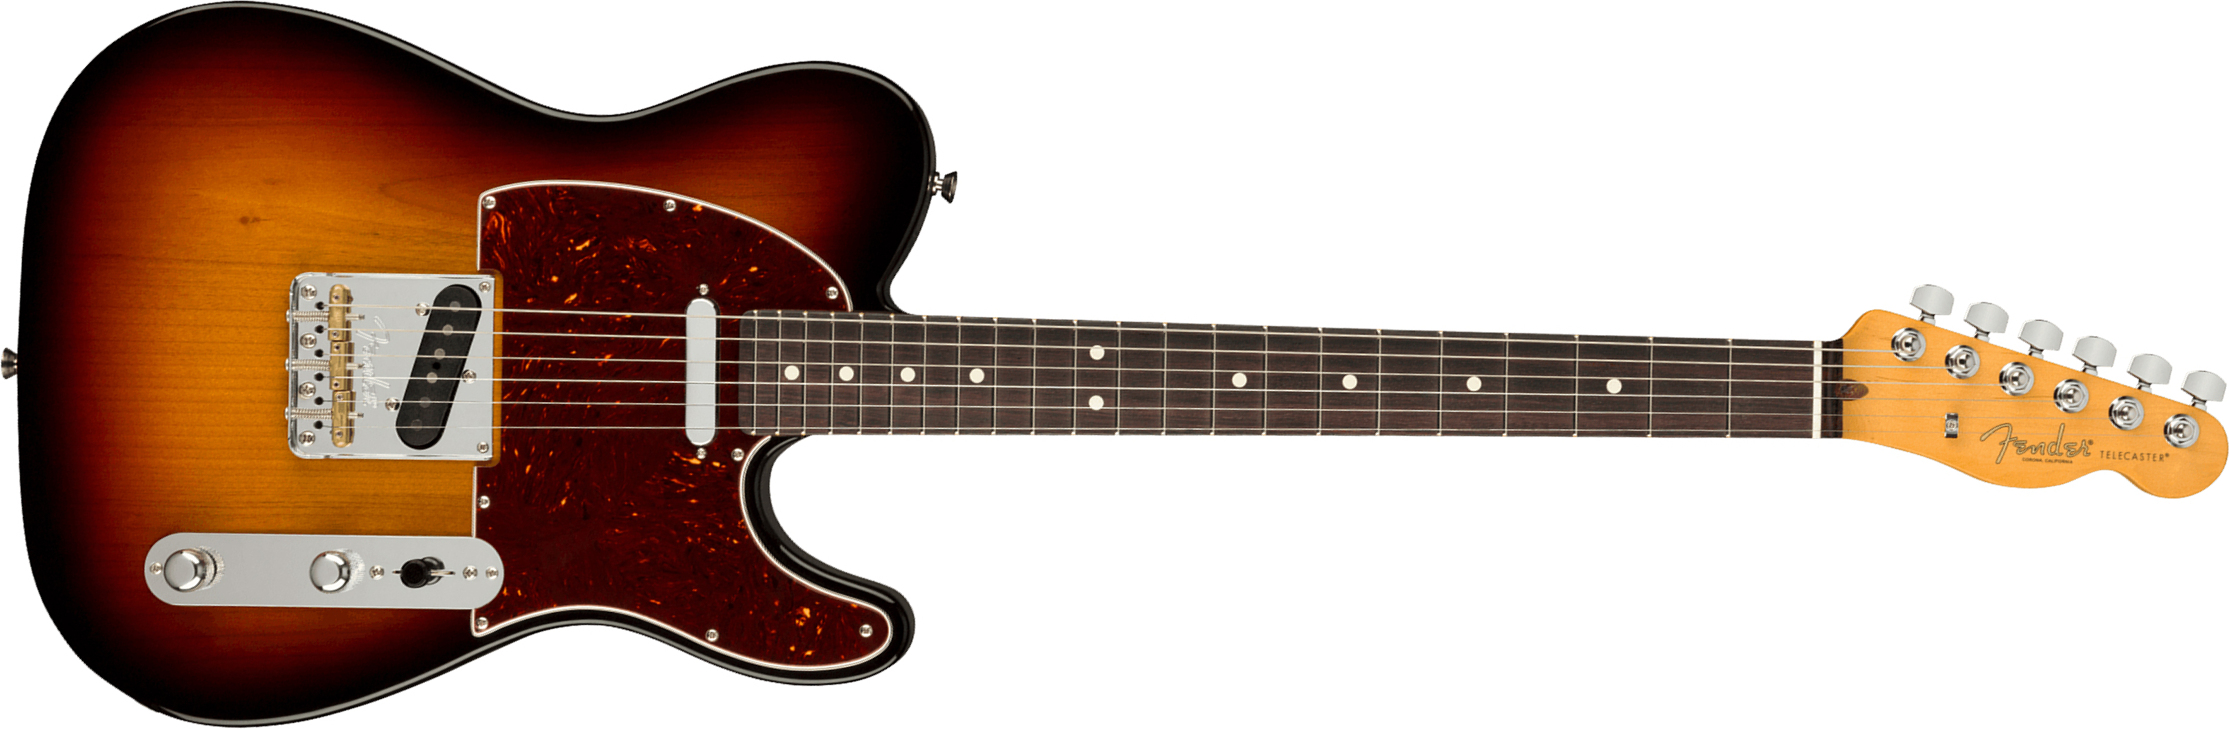 Fender Tele American Professional Ii Usa Rw - 3-color Sunburst - Televorm elektrische gitaar - Main picture